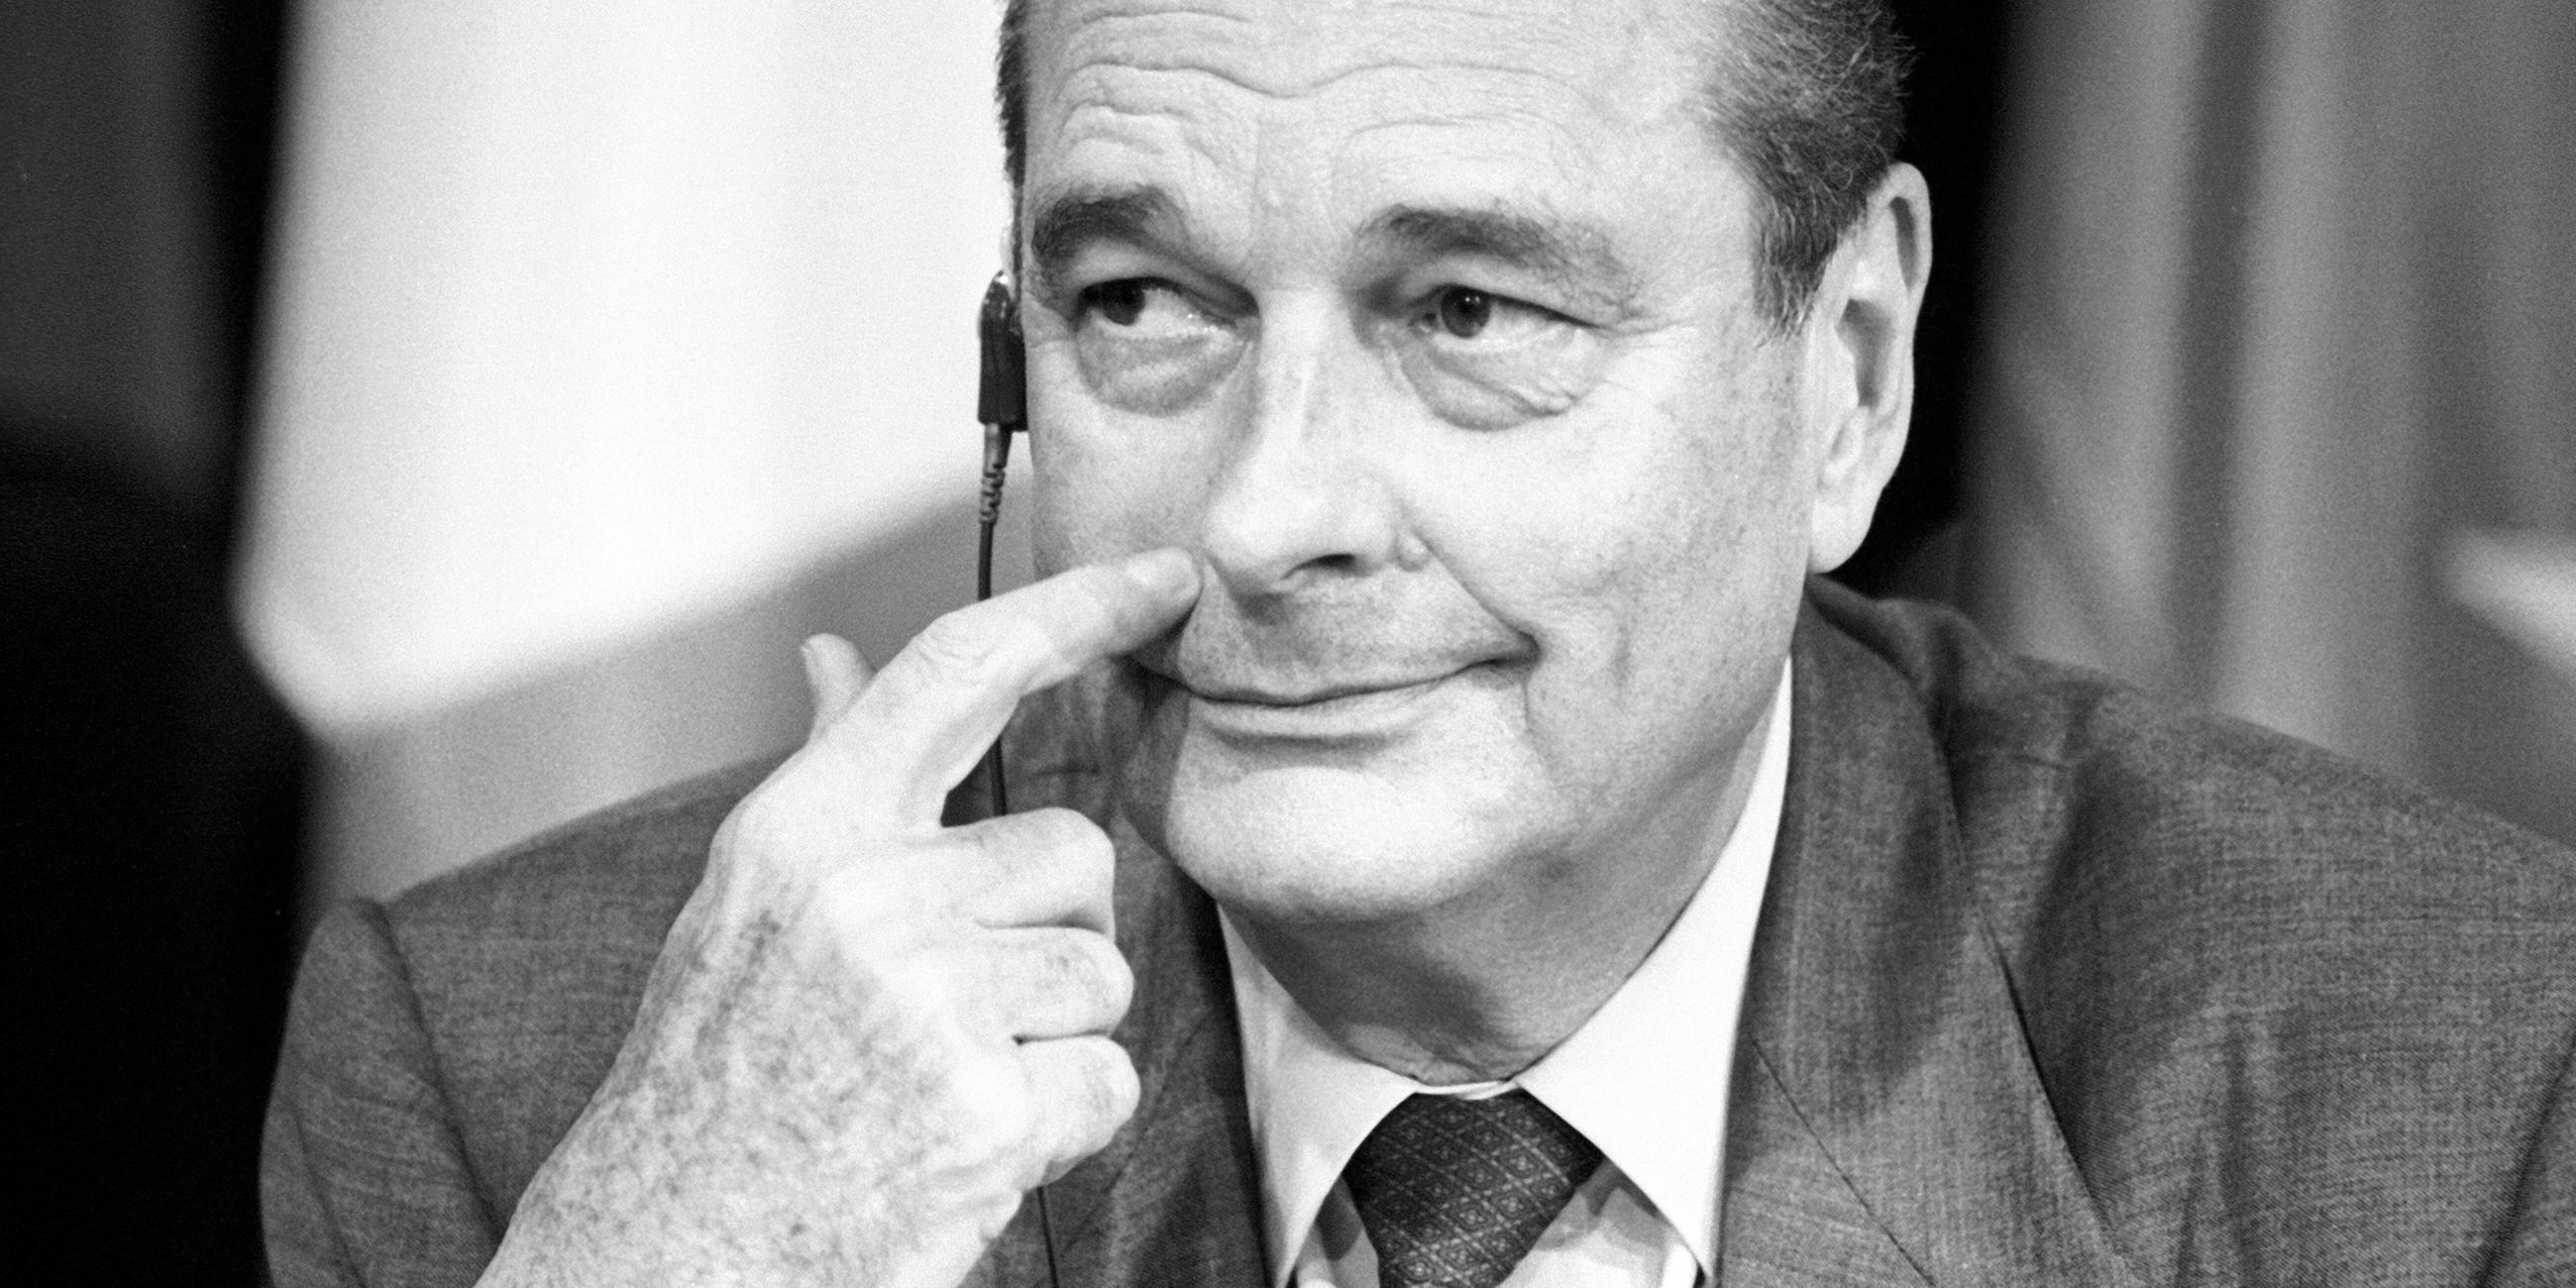 Archiv: Jacques Chirac im Jahre 1995 in Bonn